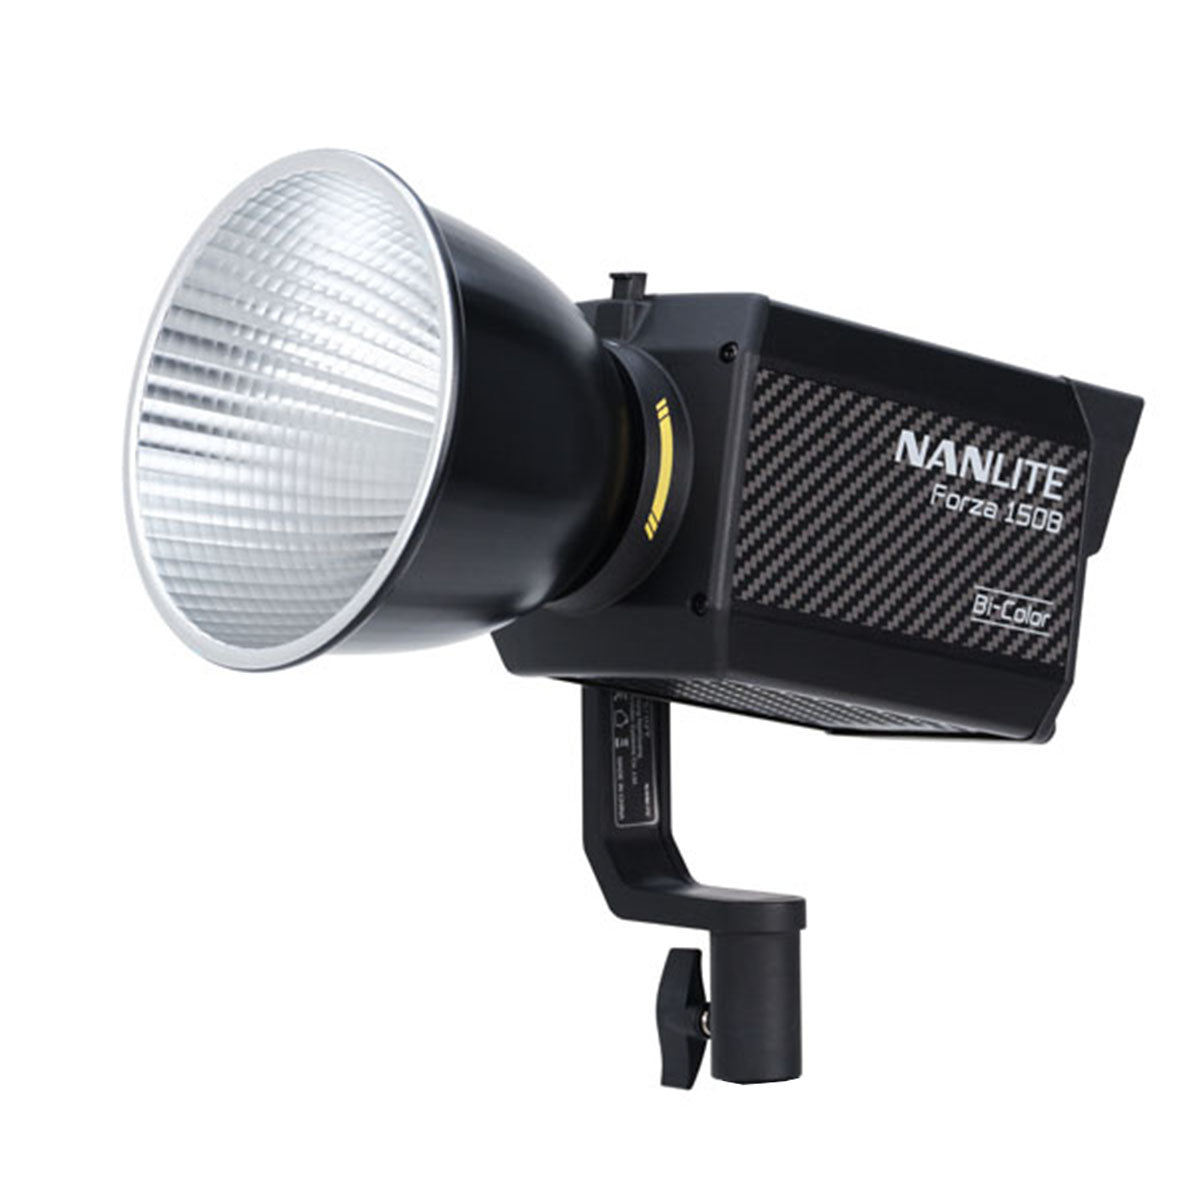 NANLITE ナンライト Forza 60 LED 1灯 グリップホルダー付